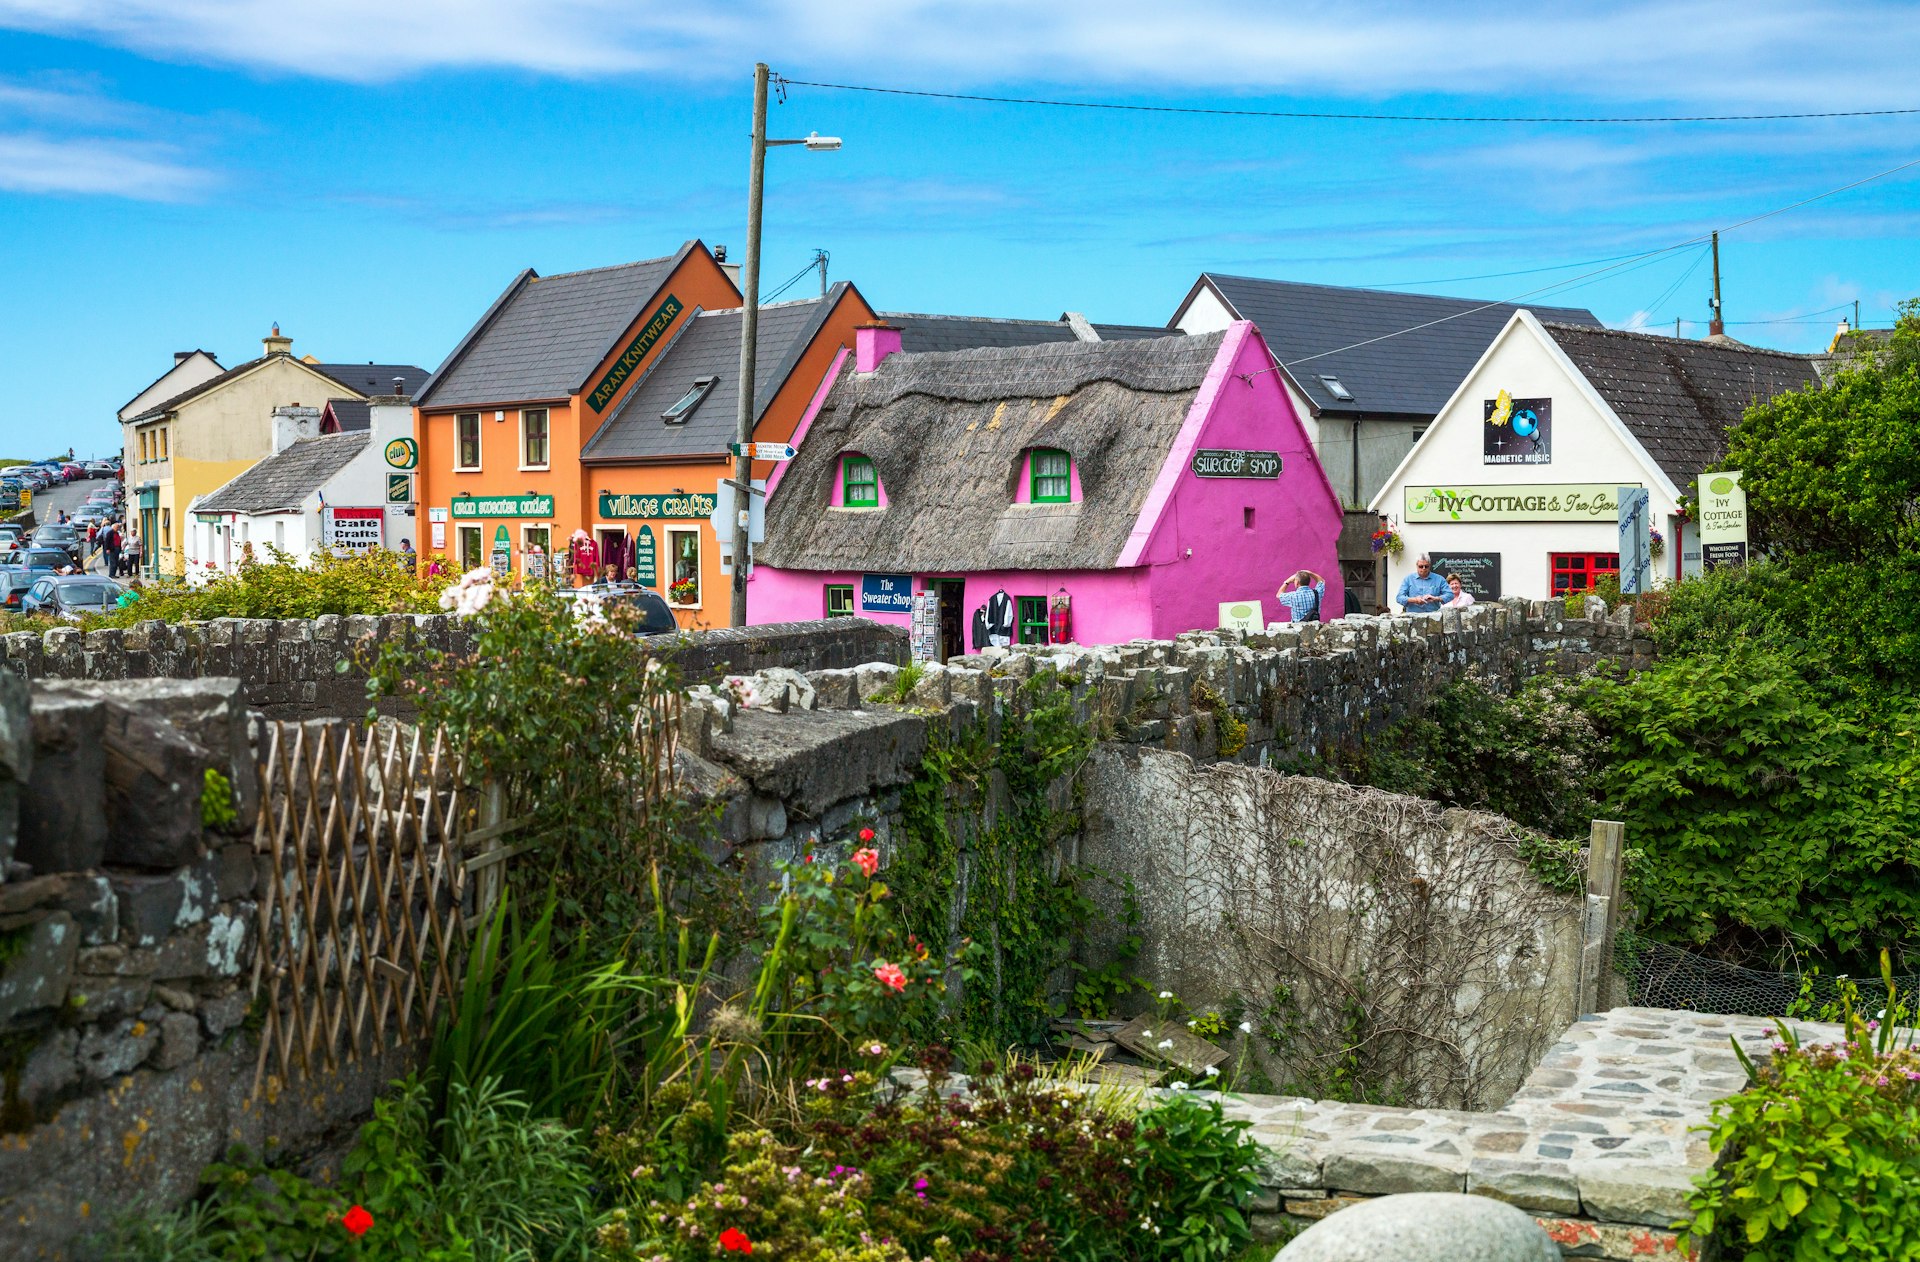   Turistas entre as casas coloridas da aldeia Doolin